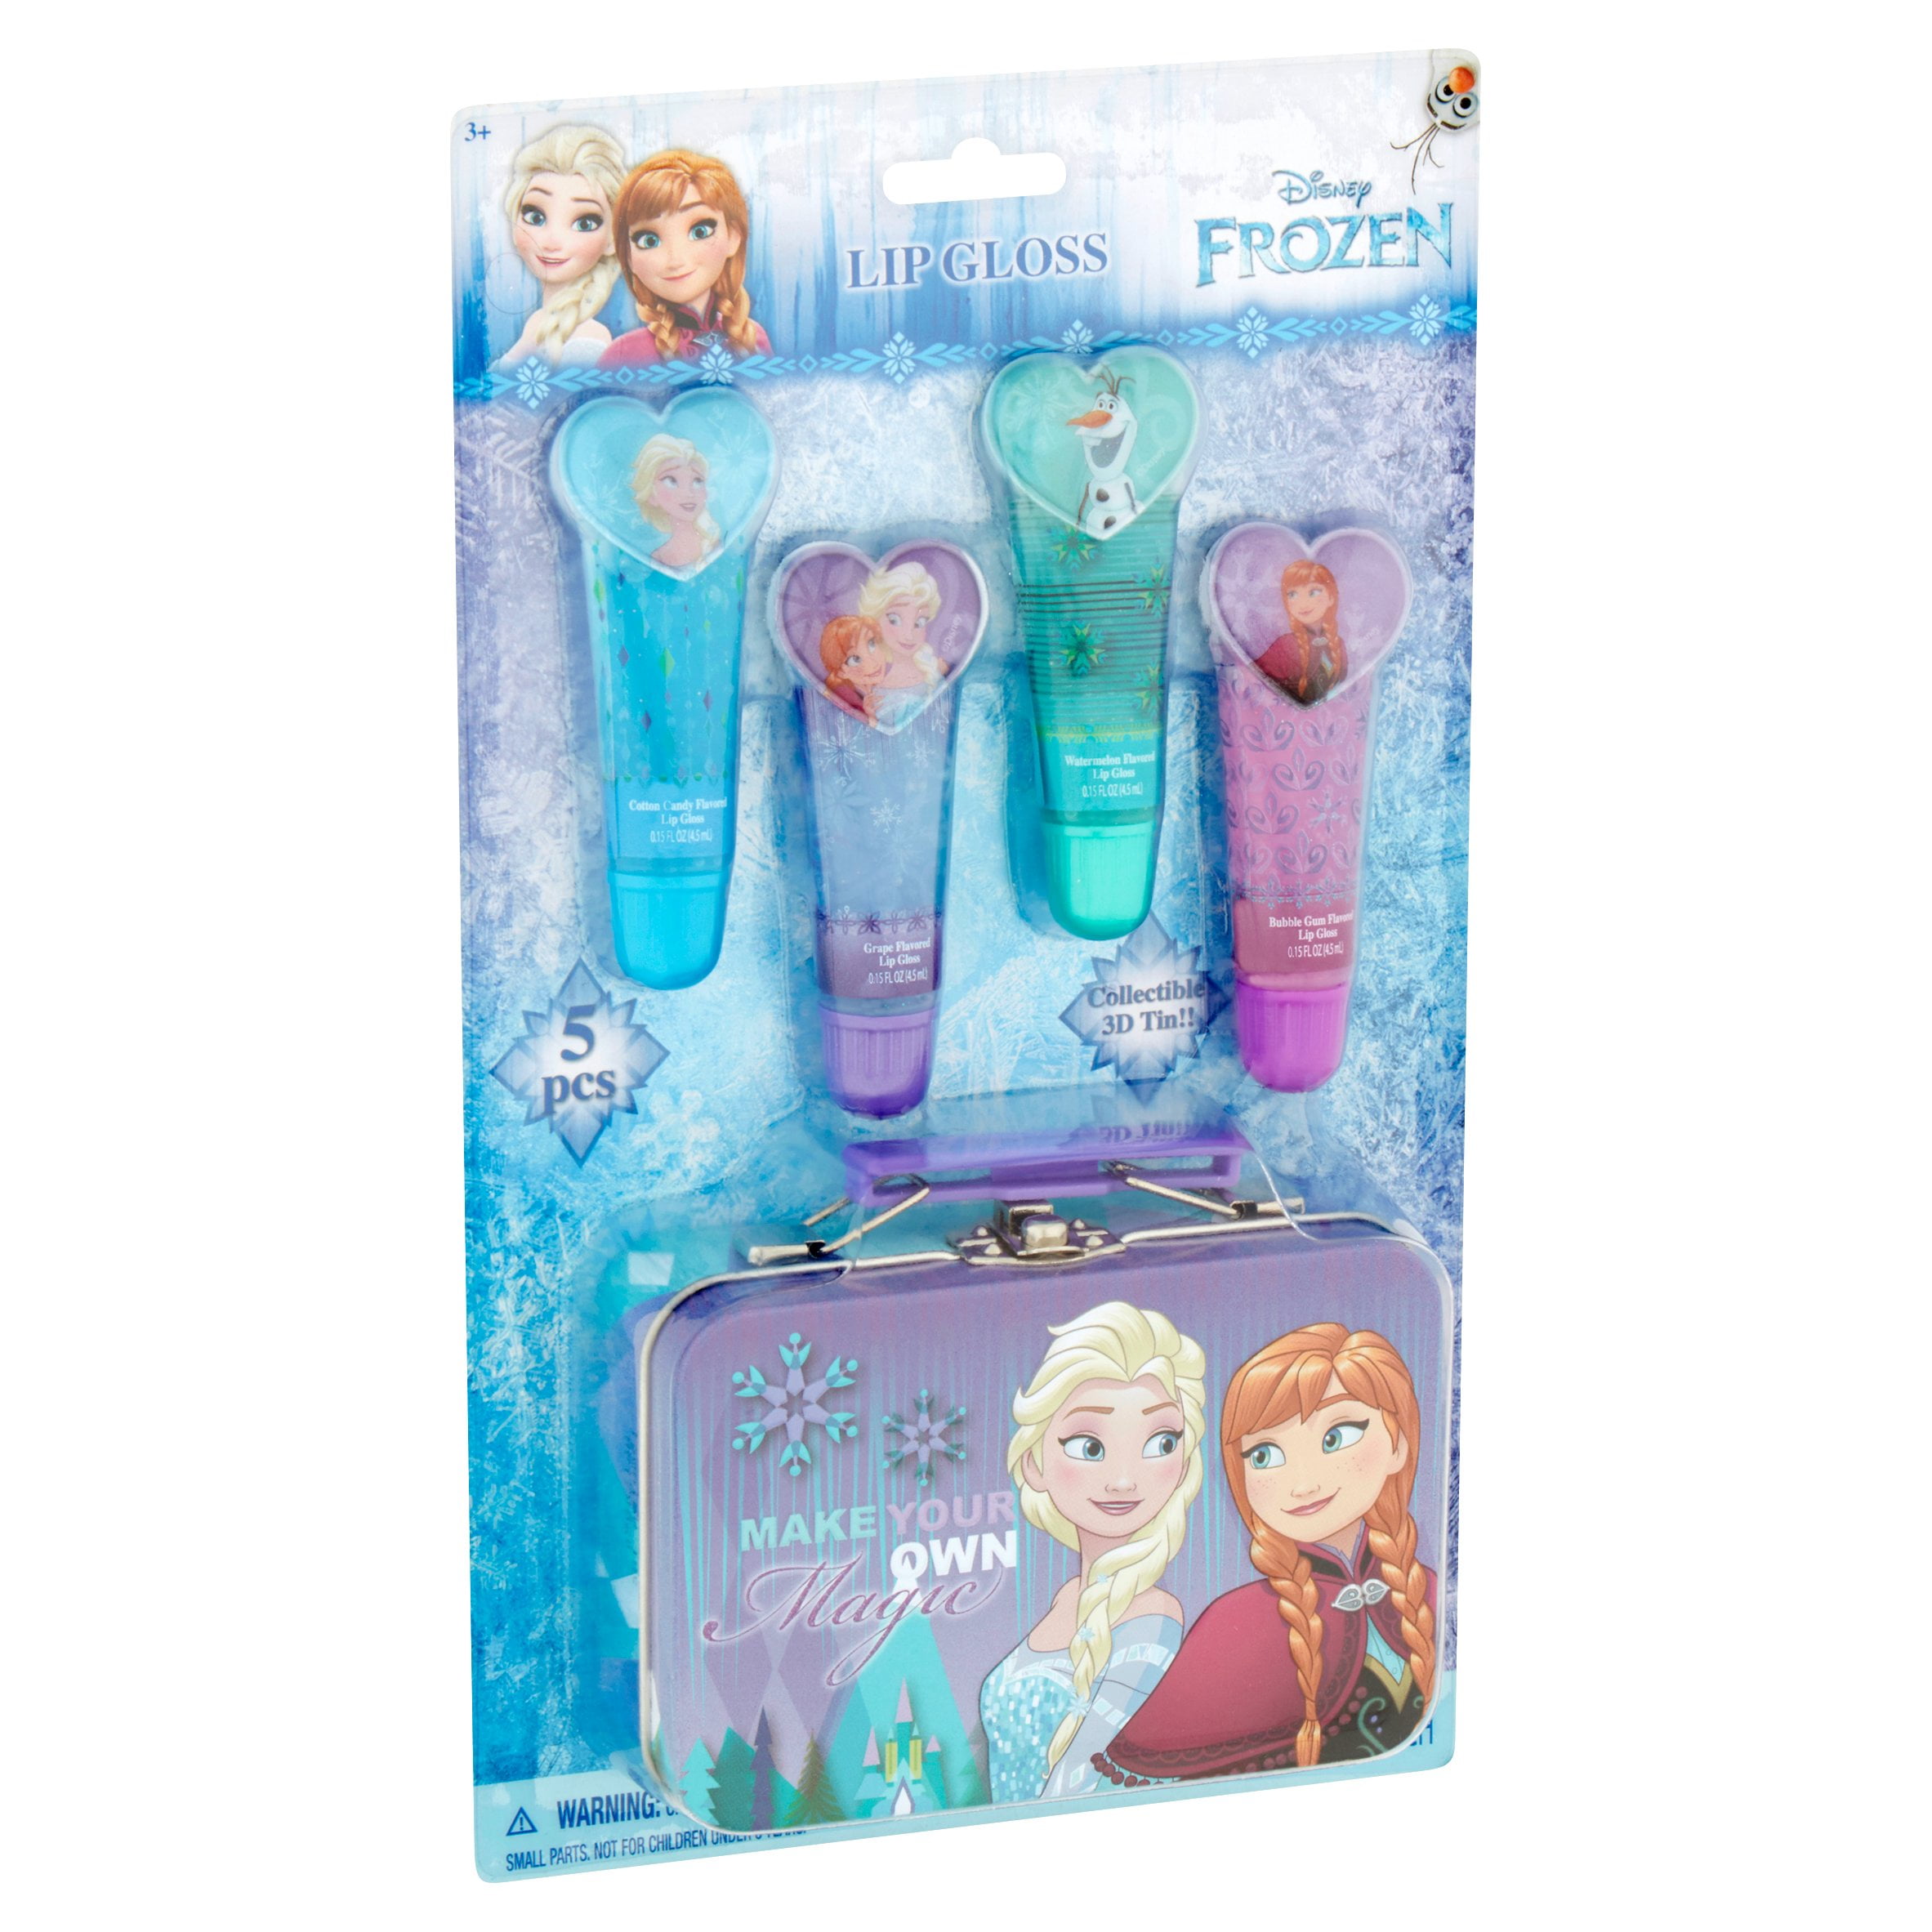 Townley Girl Frozen 4 Pack Lip Gloss with Tin, 5 CT - Walmart.com